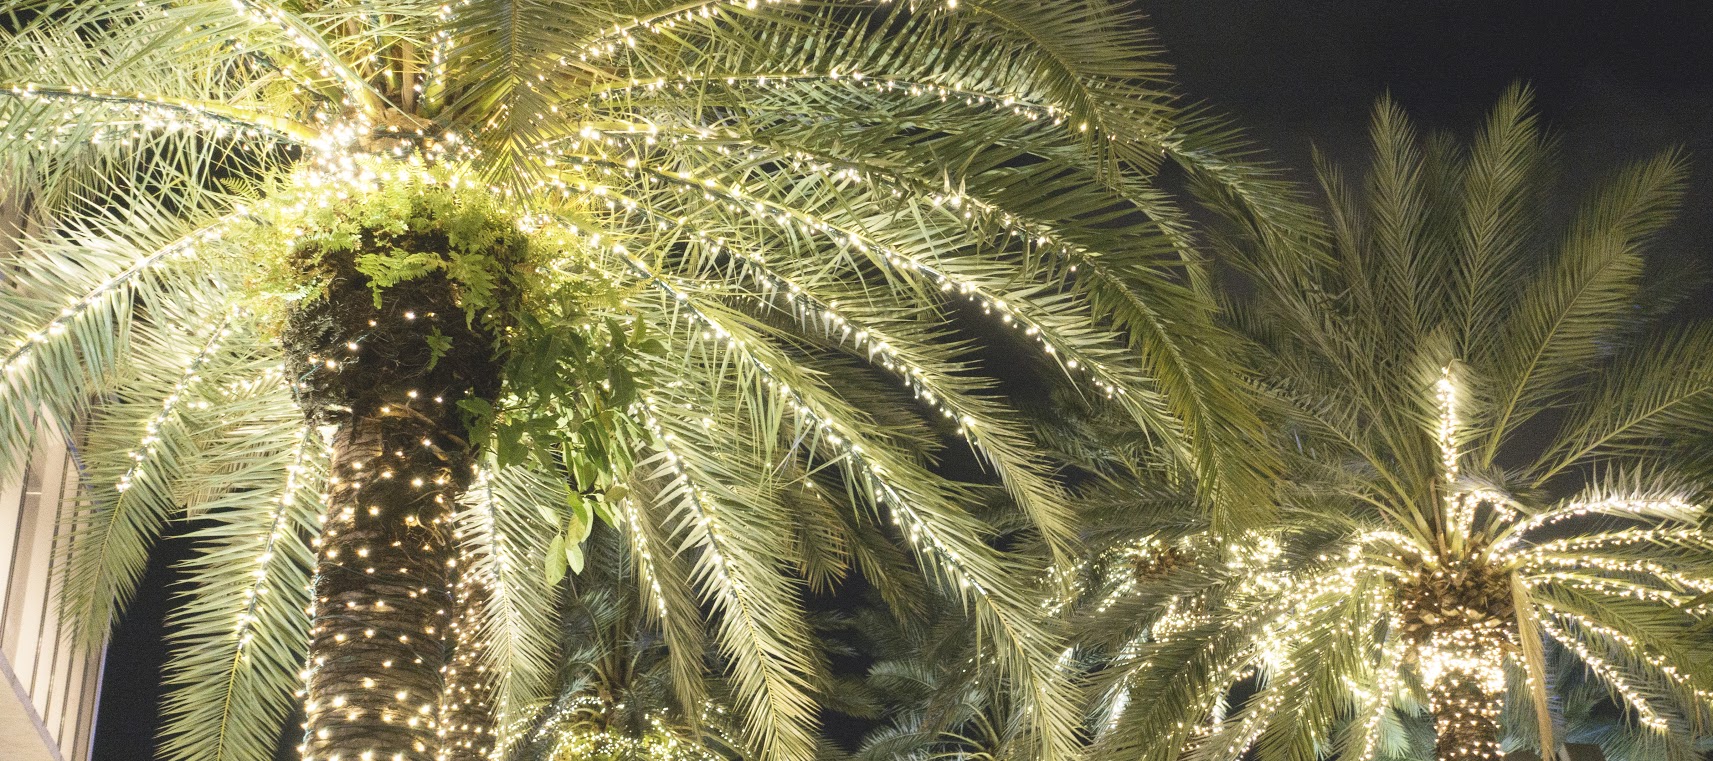 Miami Beach palm tree with Christmas lights